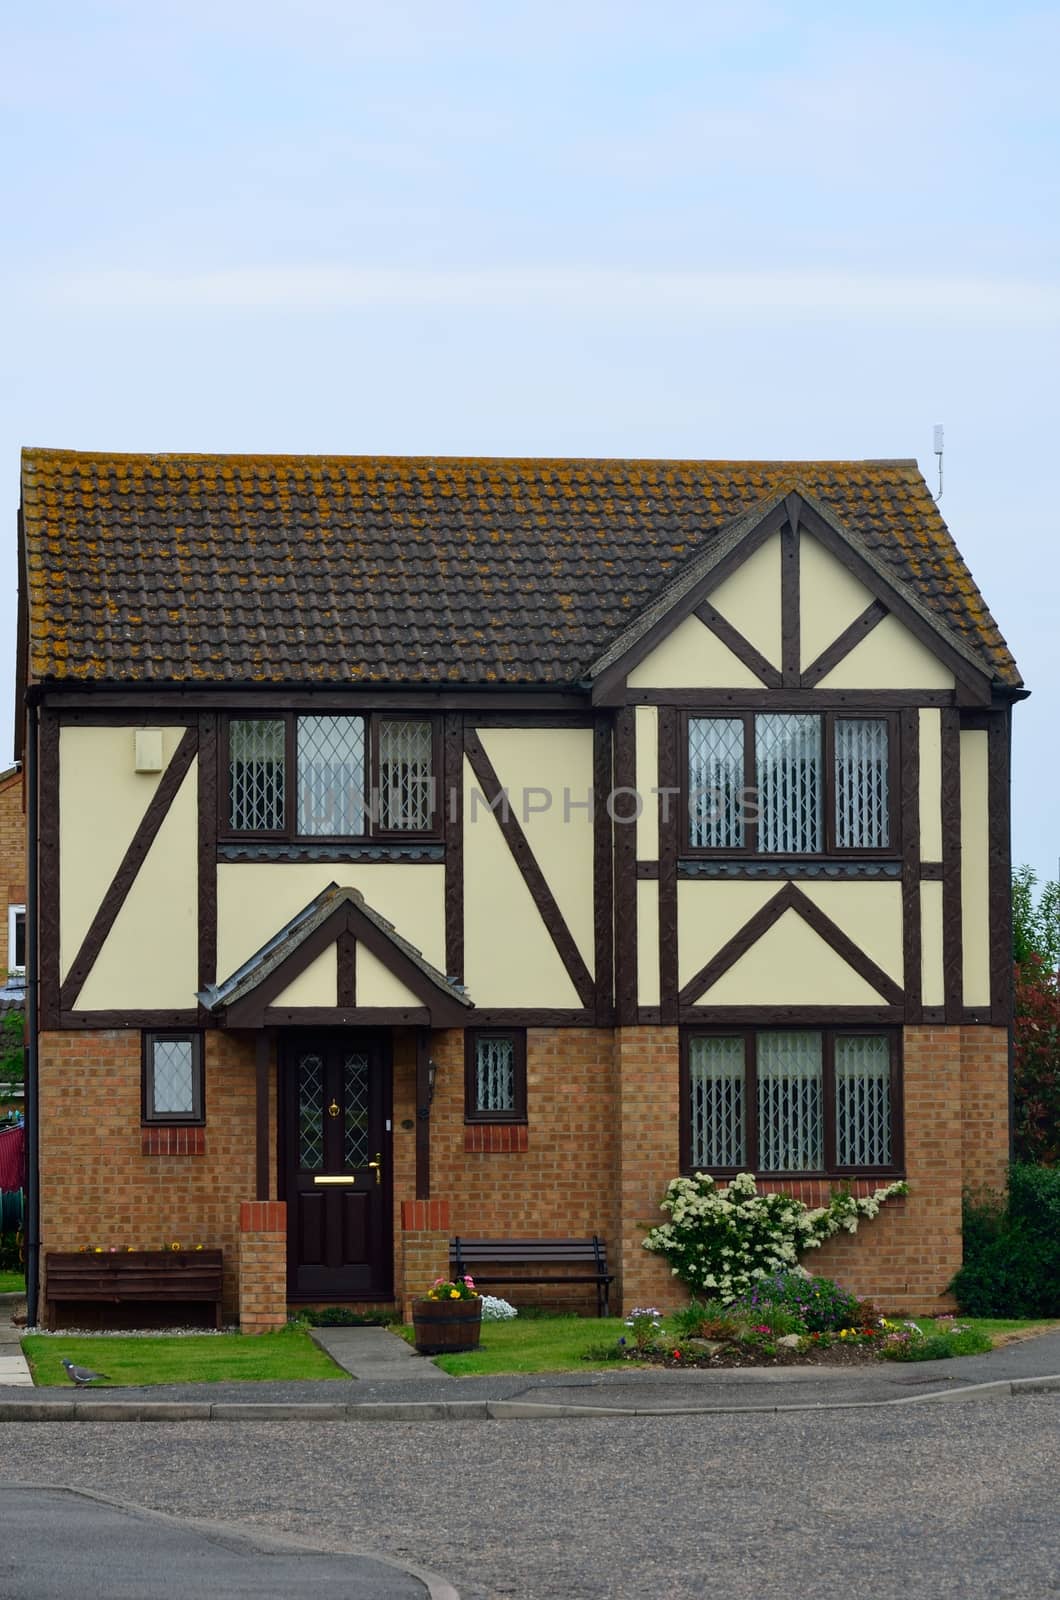 Mock Tudor House by pauws99